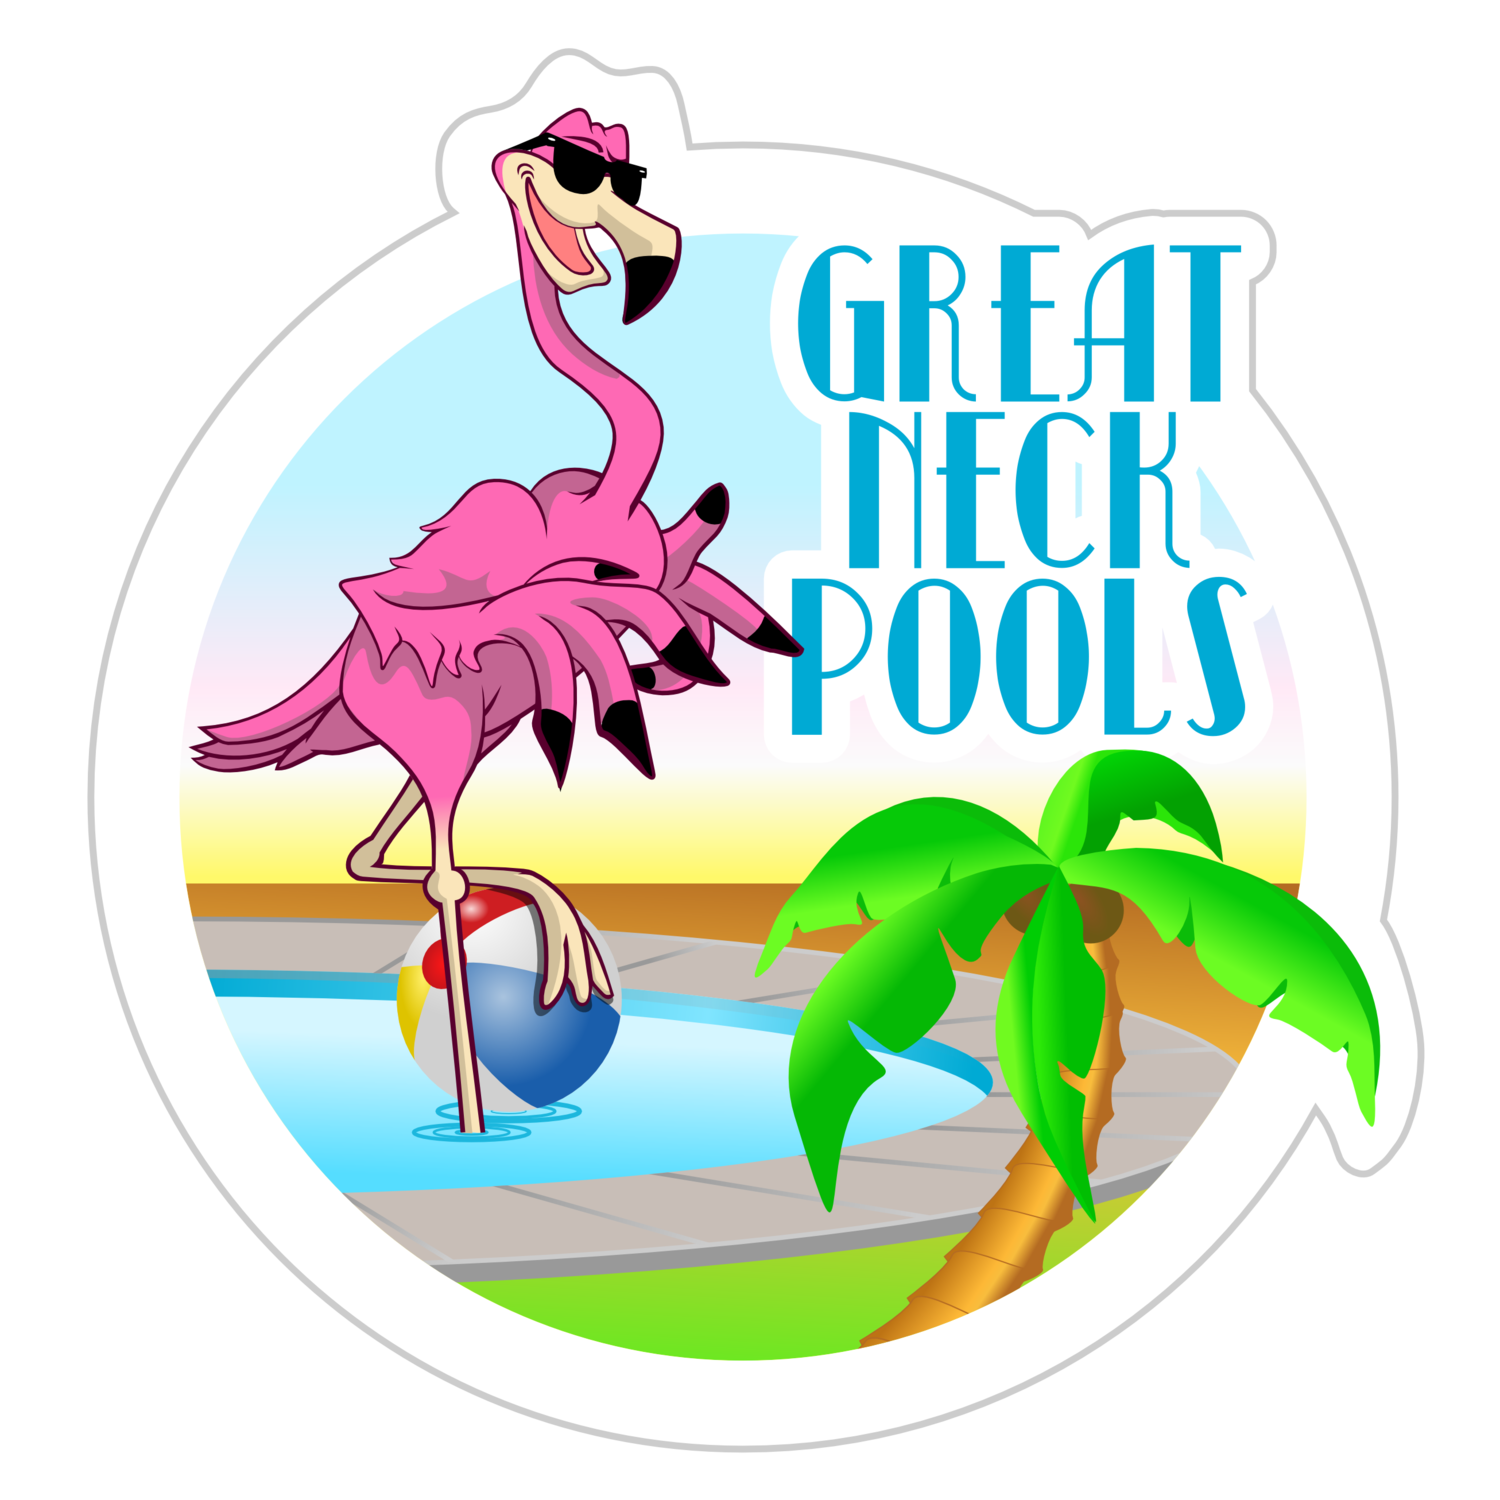 clipart swimming flamingo